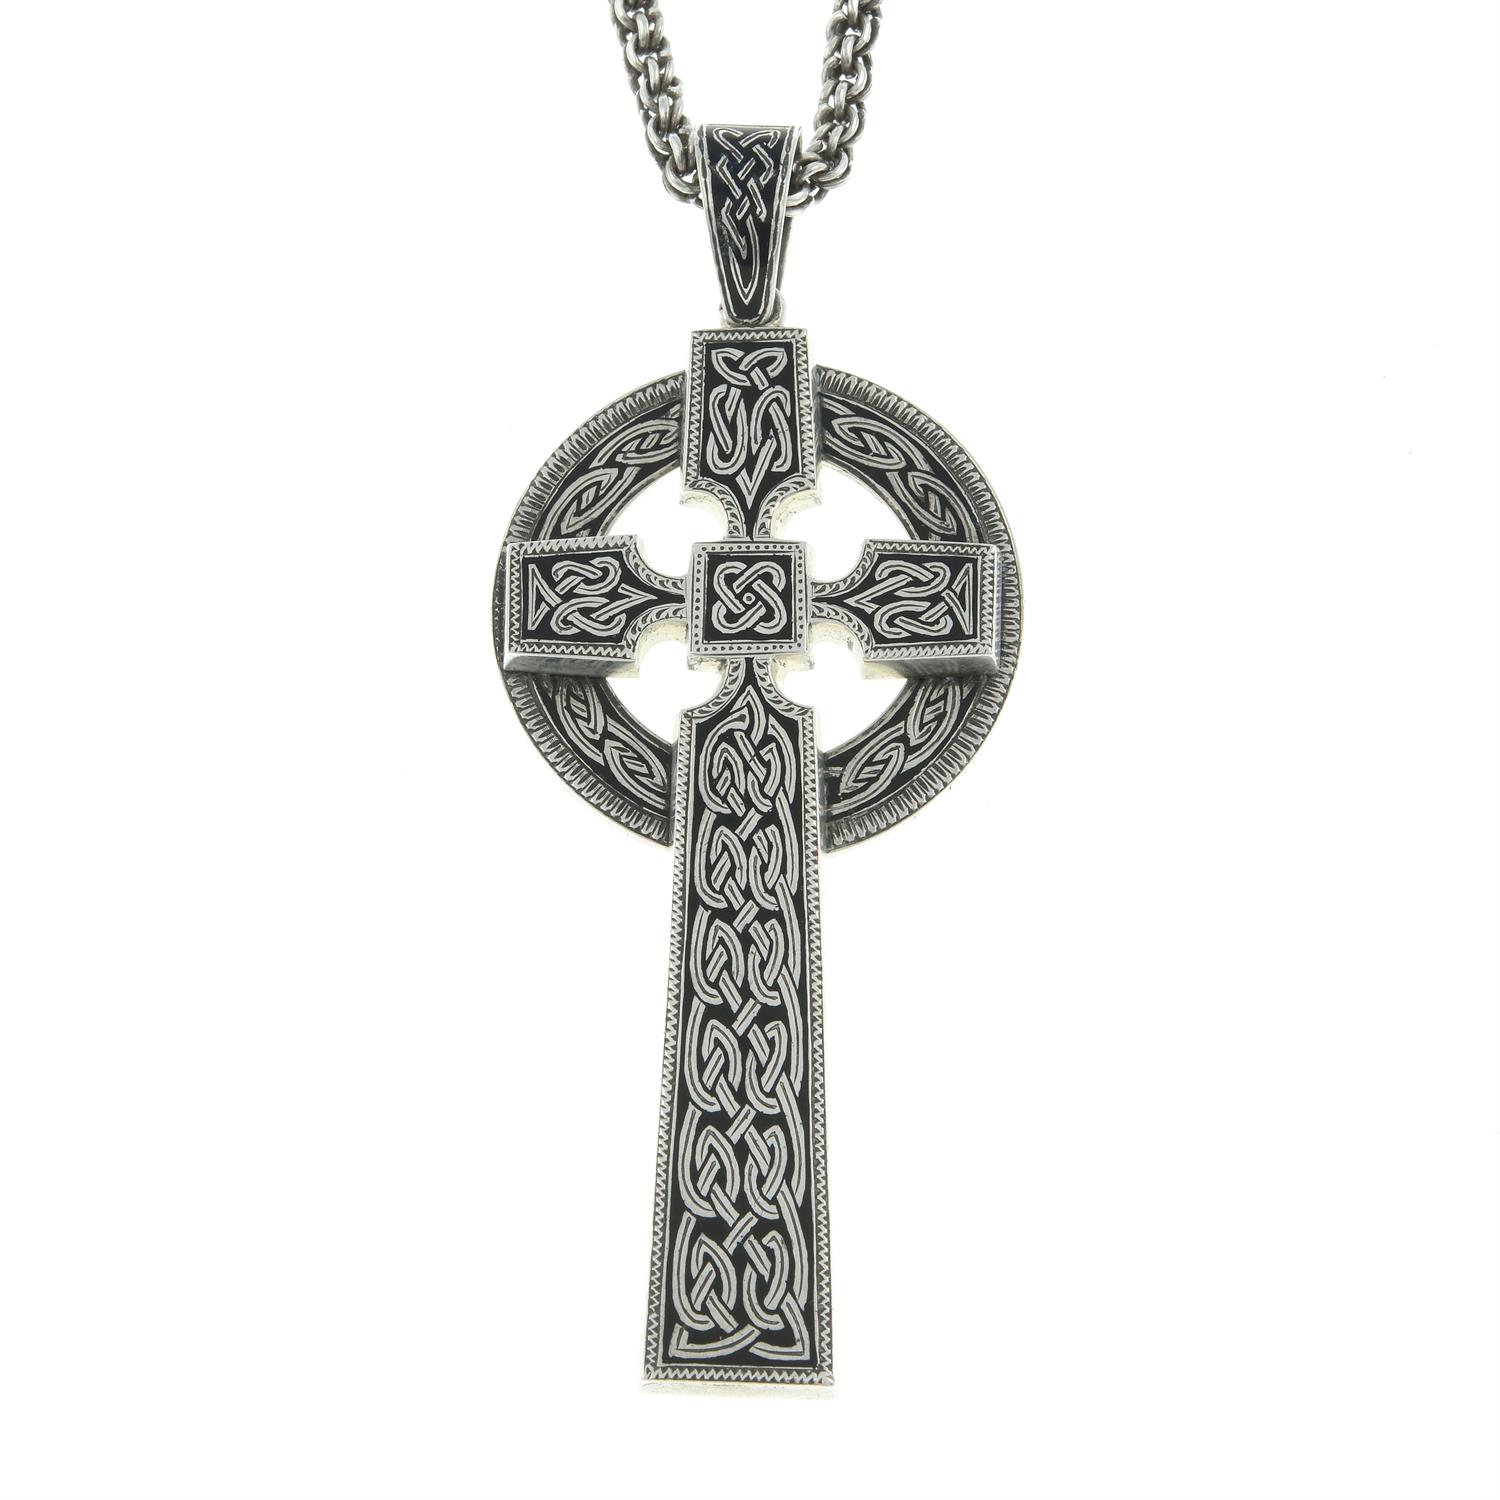 Enamel cross pendant, with chain